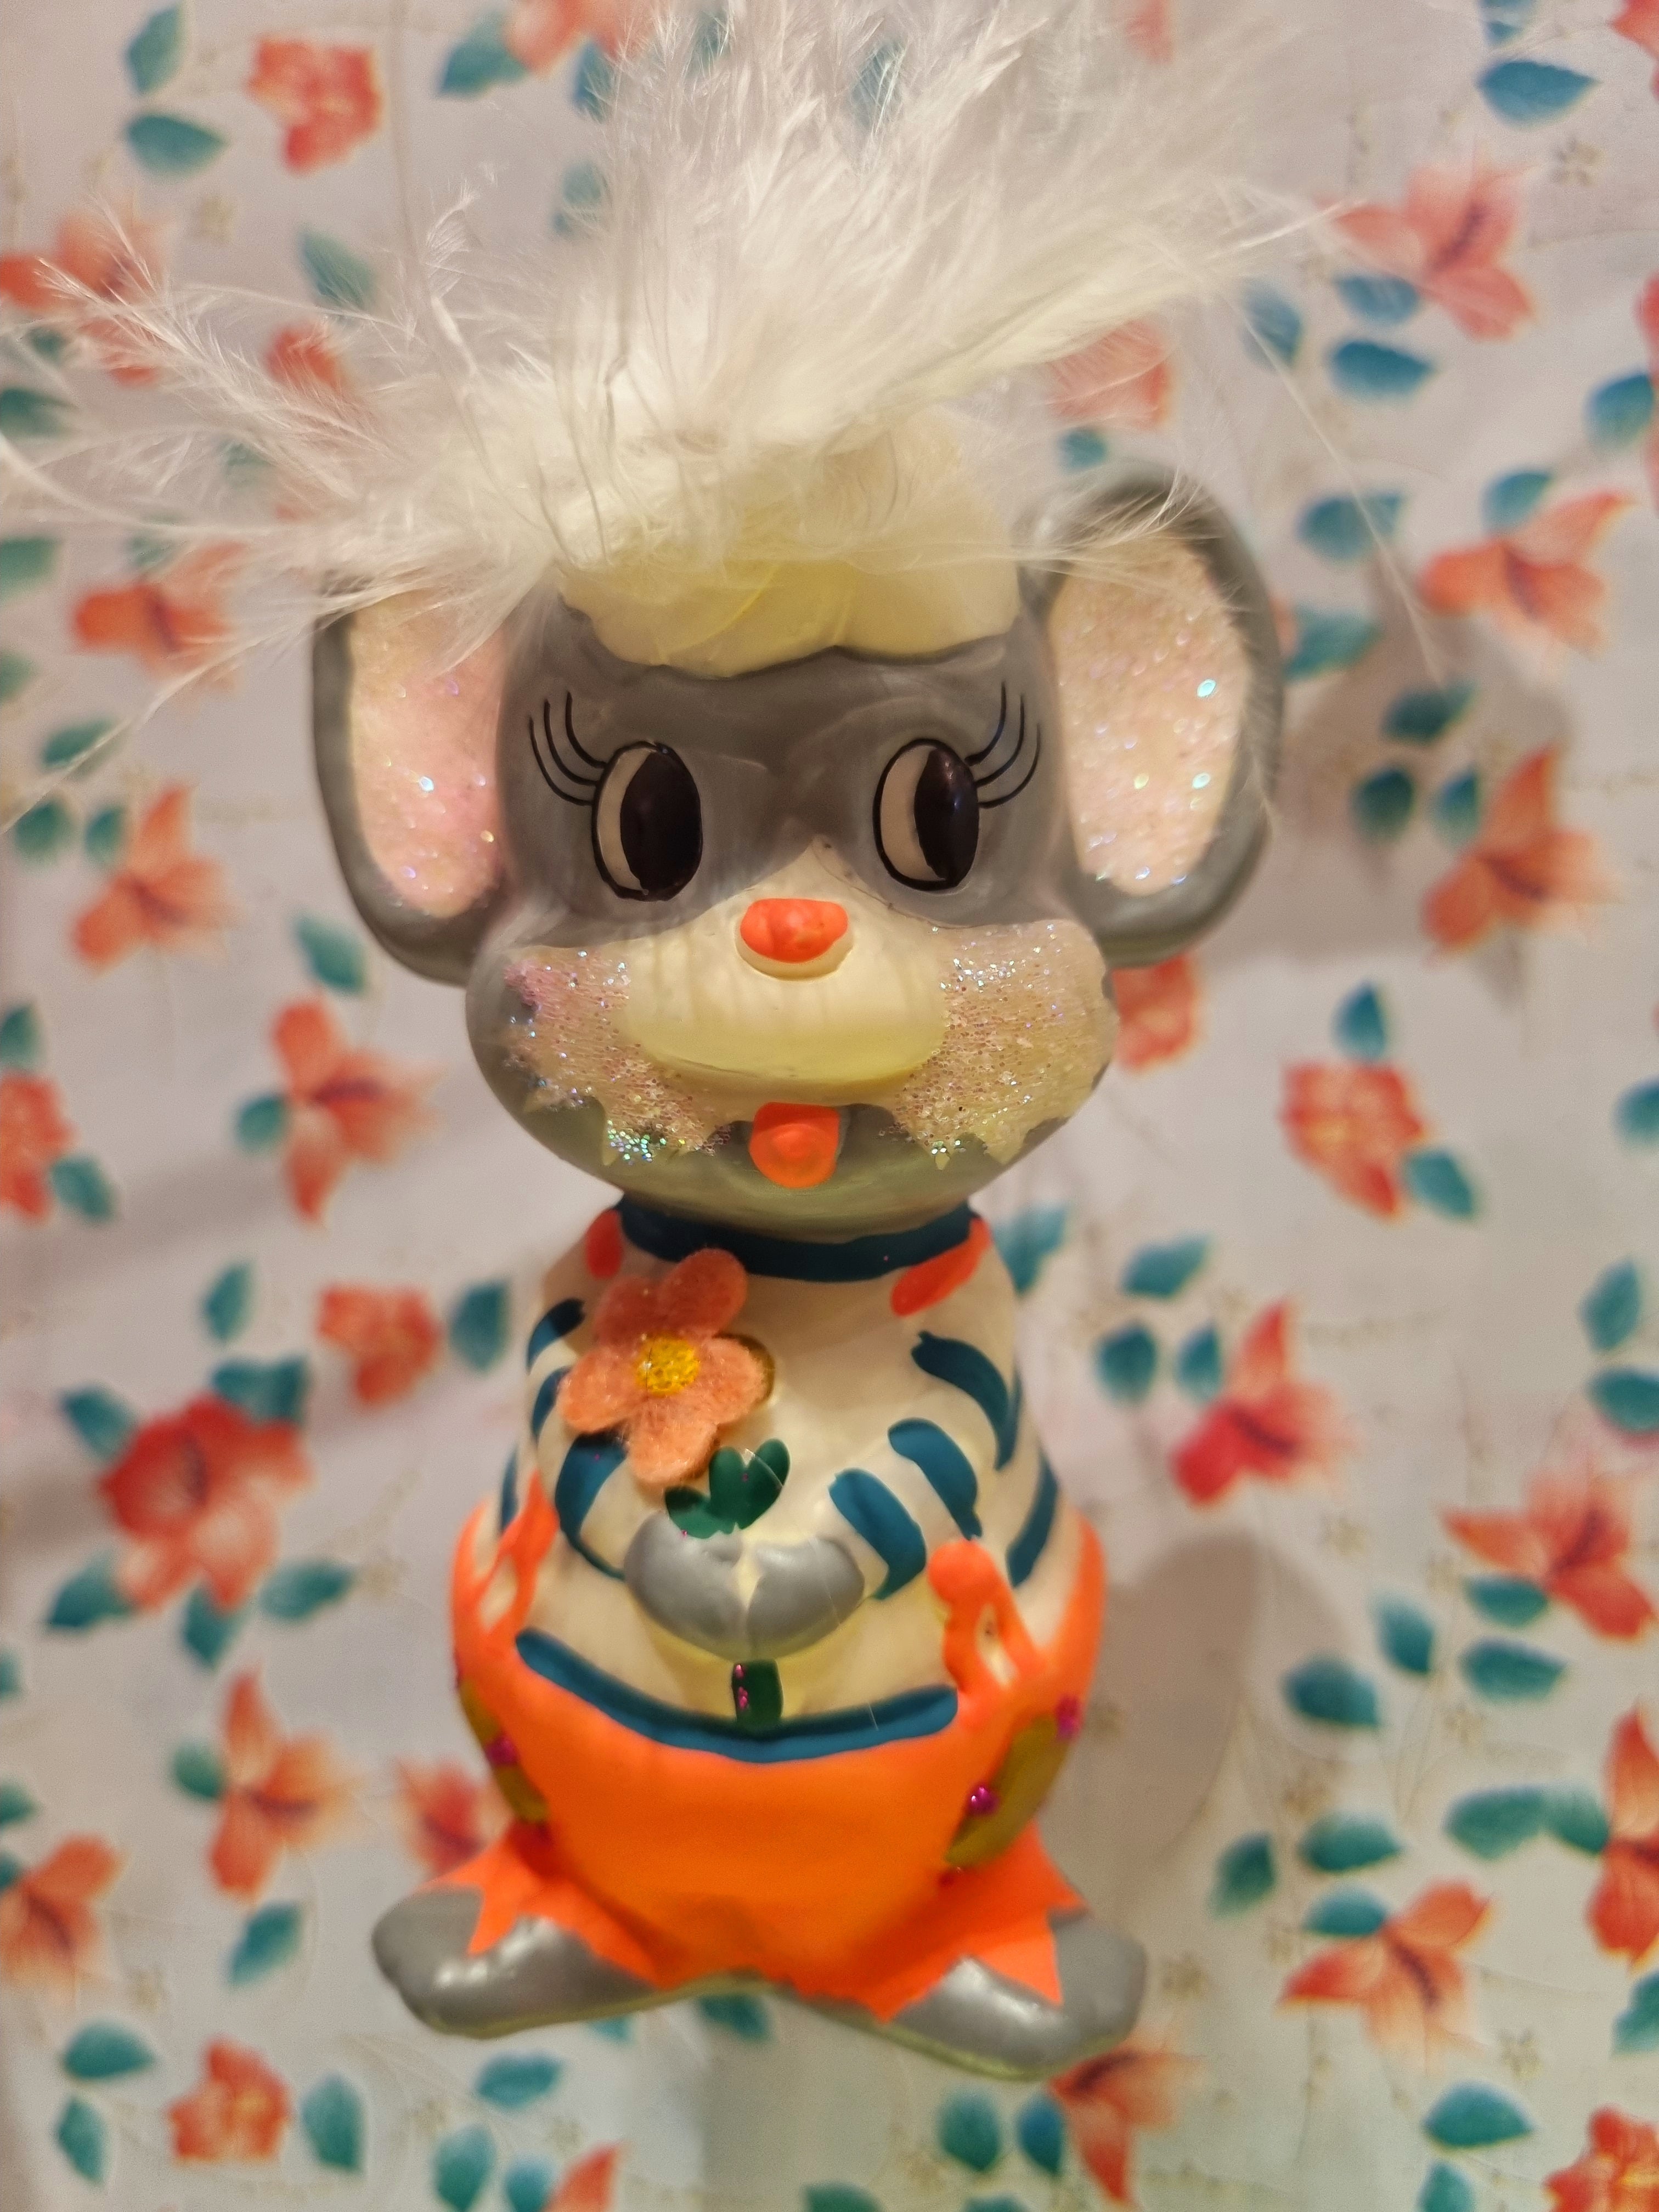 Kitsch mouse decoration